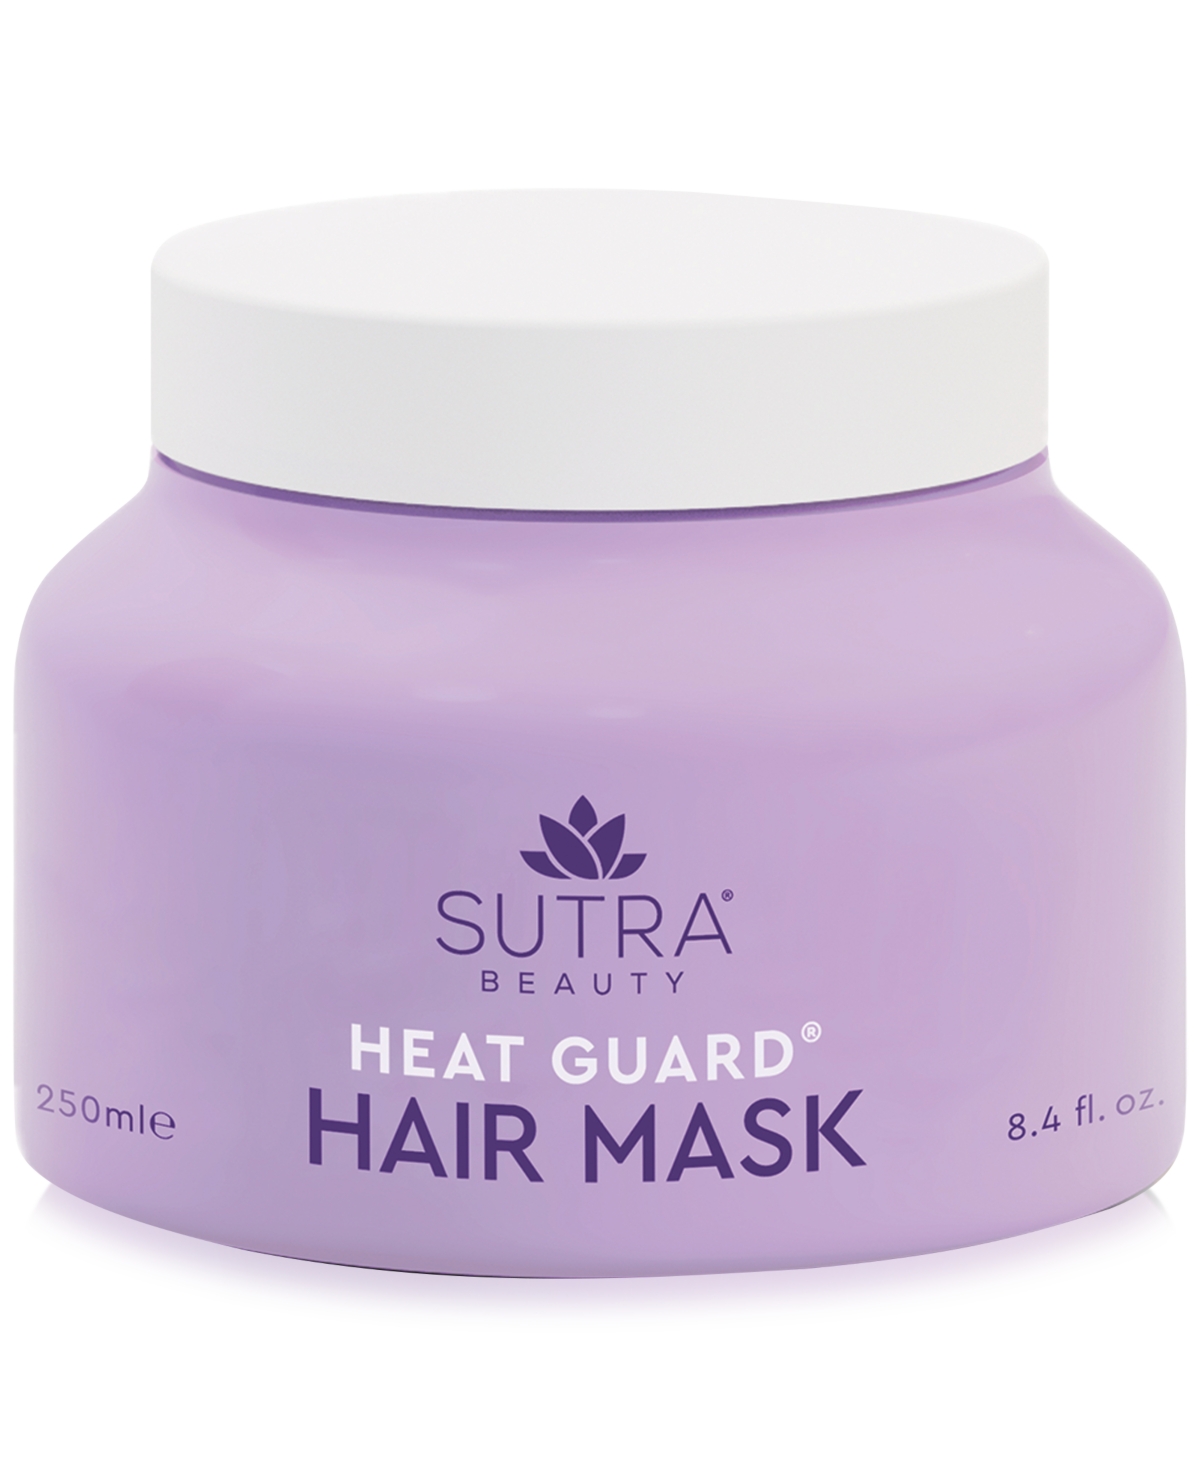 Heat Guard Hair Mask, 8.4 oz.